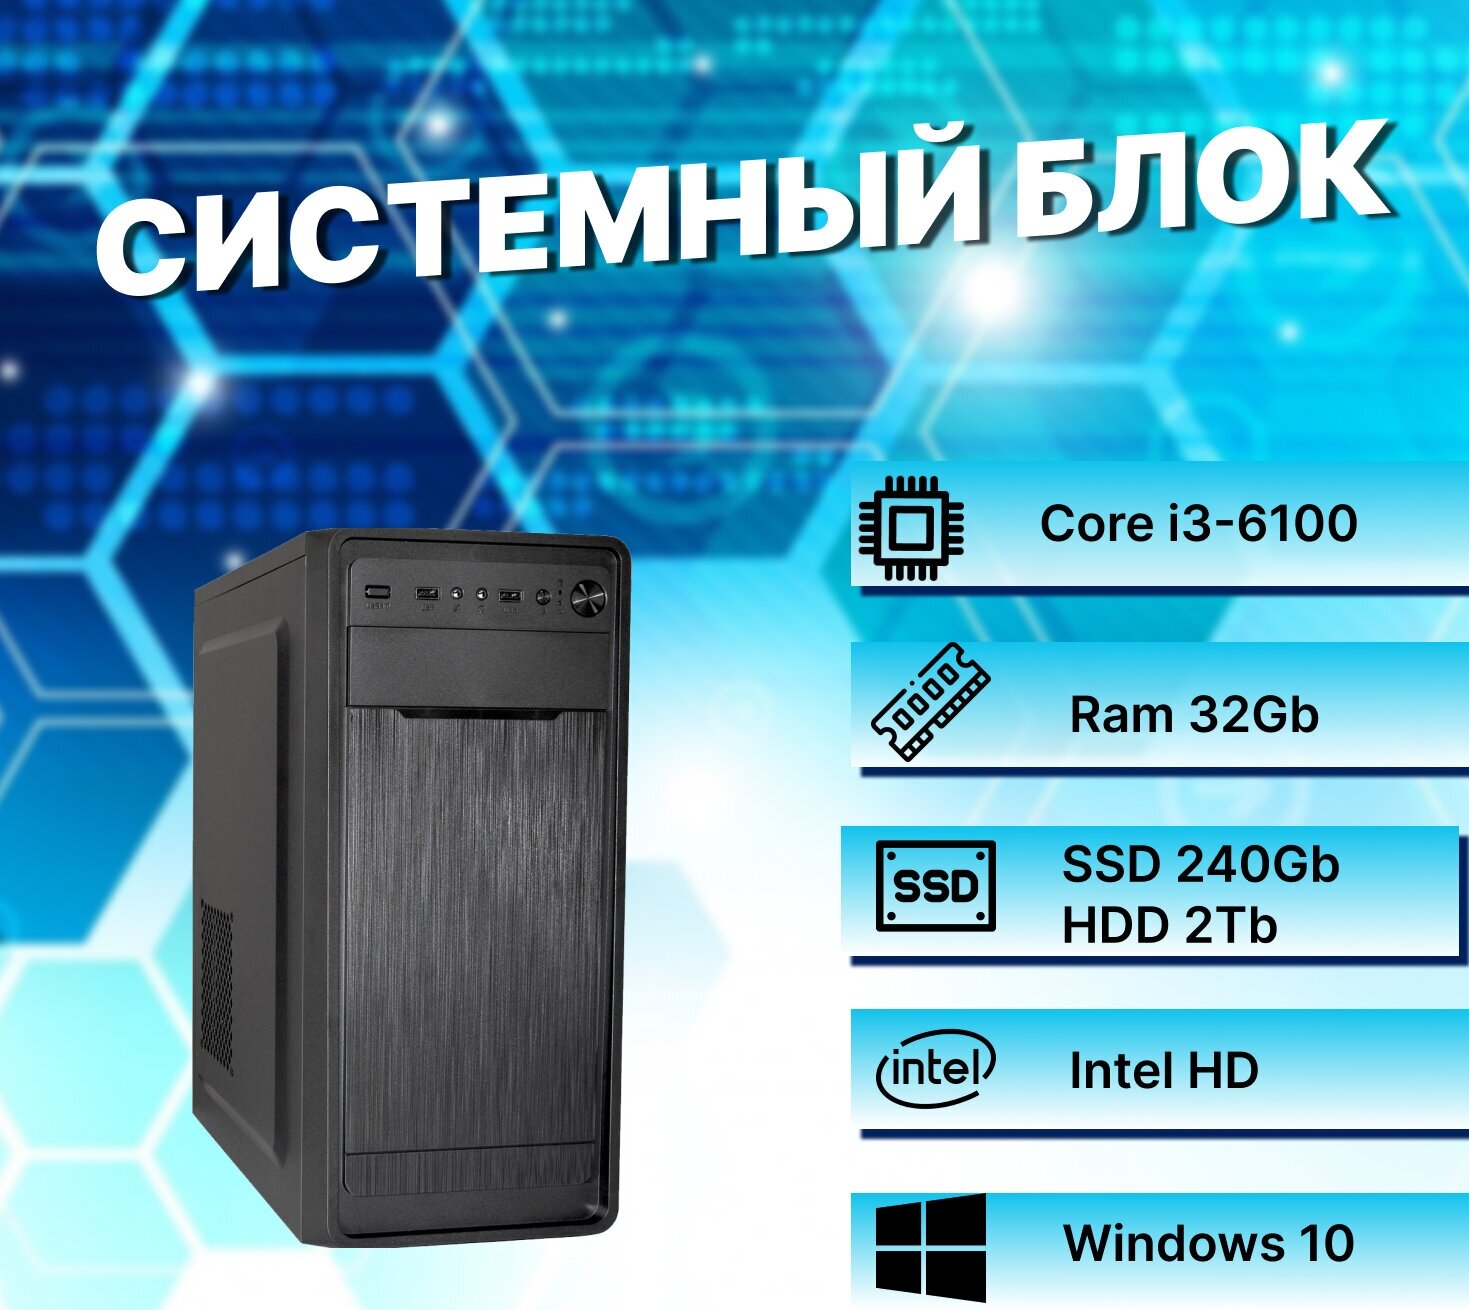 Системный блок Intel Core I3-6100 (3.7ГГц)/ RAM 32Gb/ SSD 240Gb/ HDD 2Tb/ Intel HD/ Windows 10 Pro